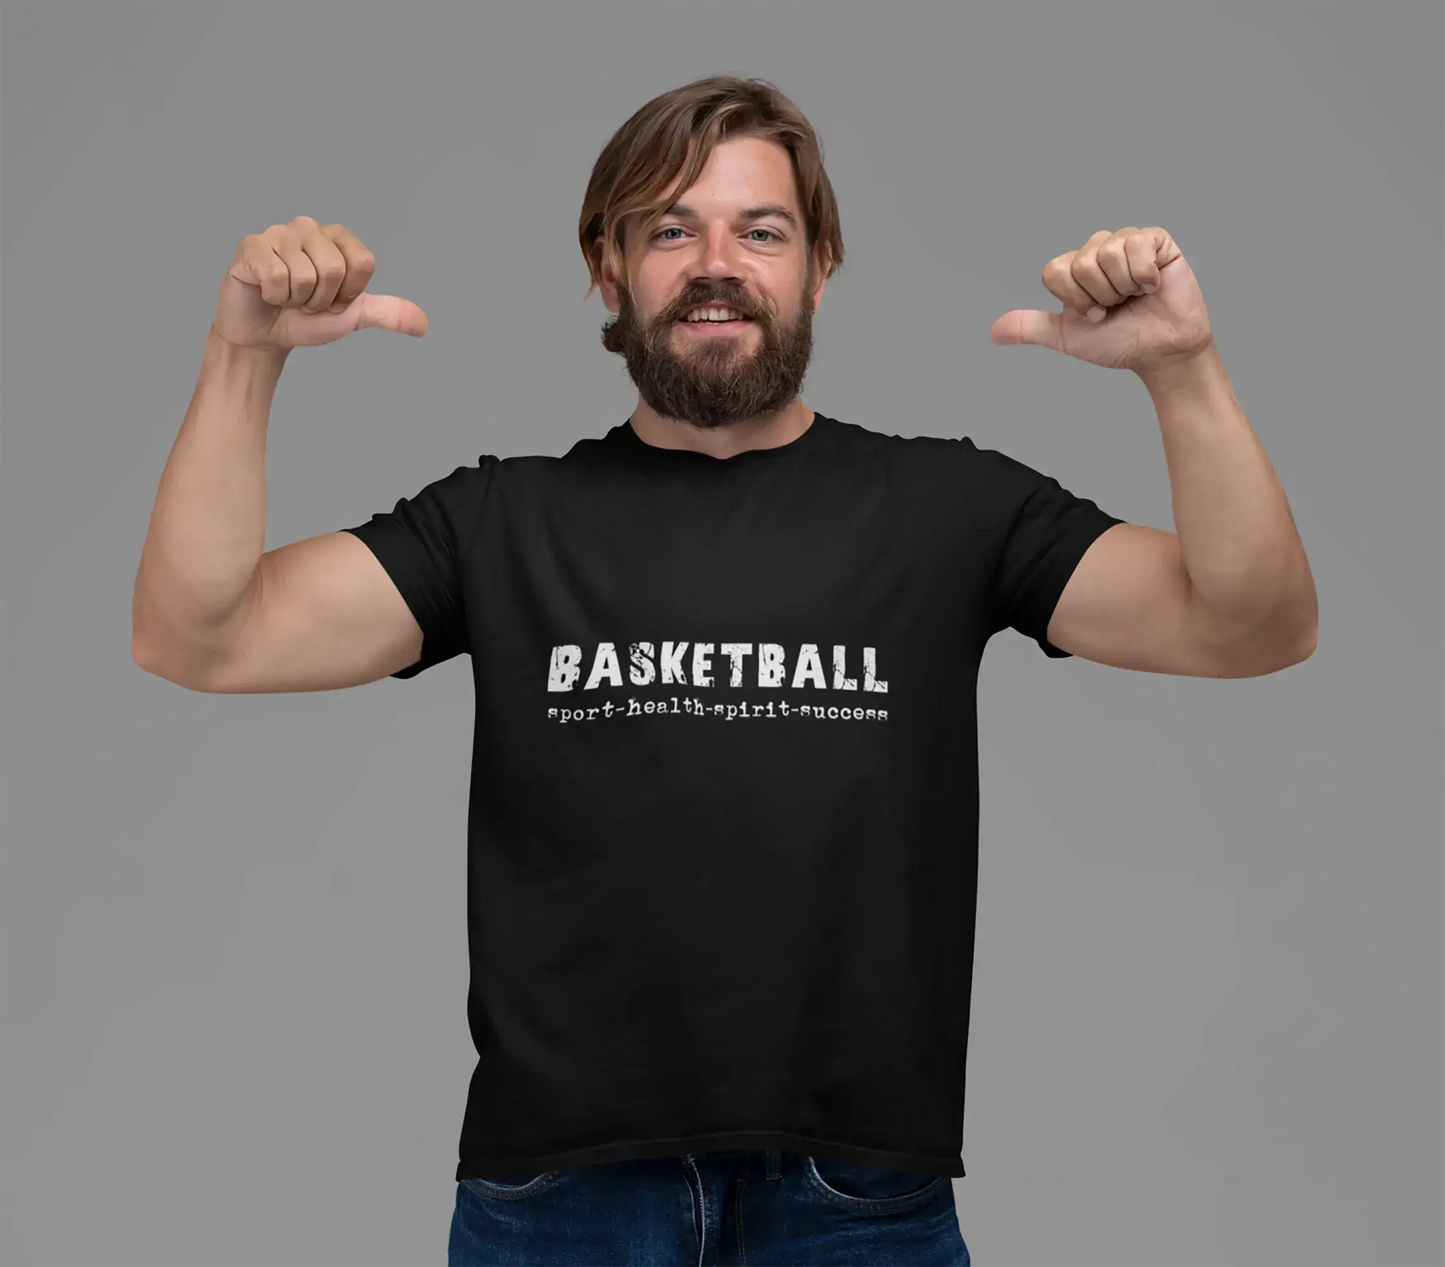 Basketball Sport-Health-Spirit-Success Herren Kurzarm-Rundhals-T-Shirt 00079